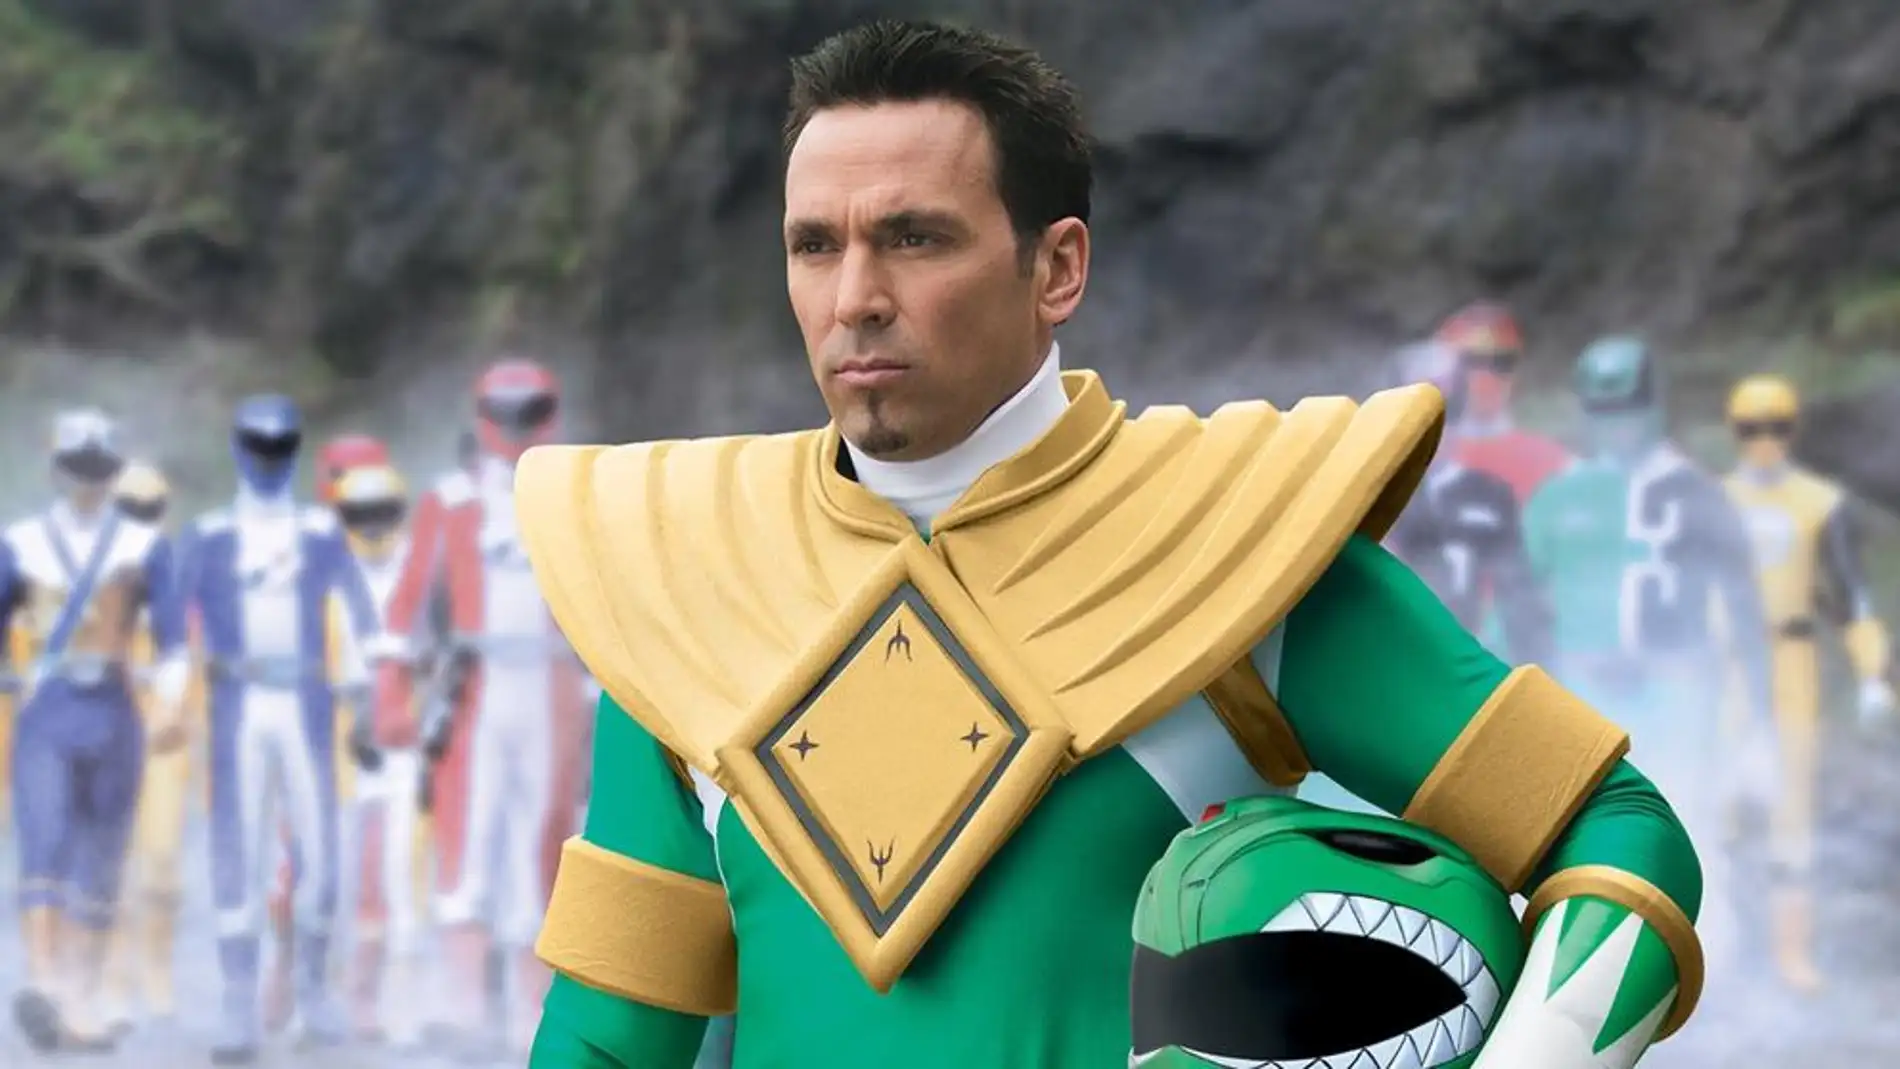 Jason David Frank como Power Ranger Verde